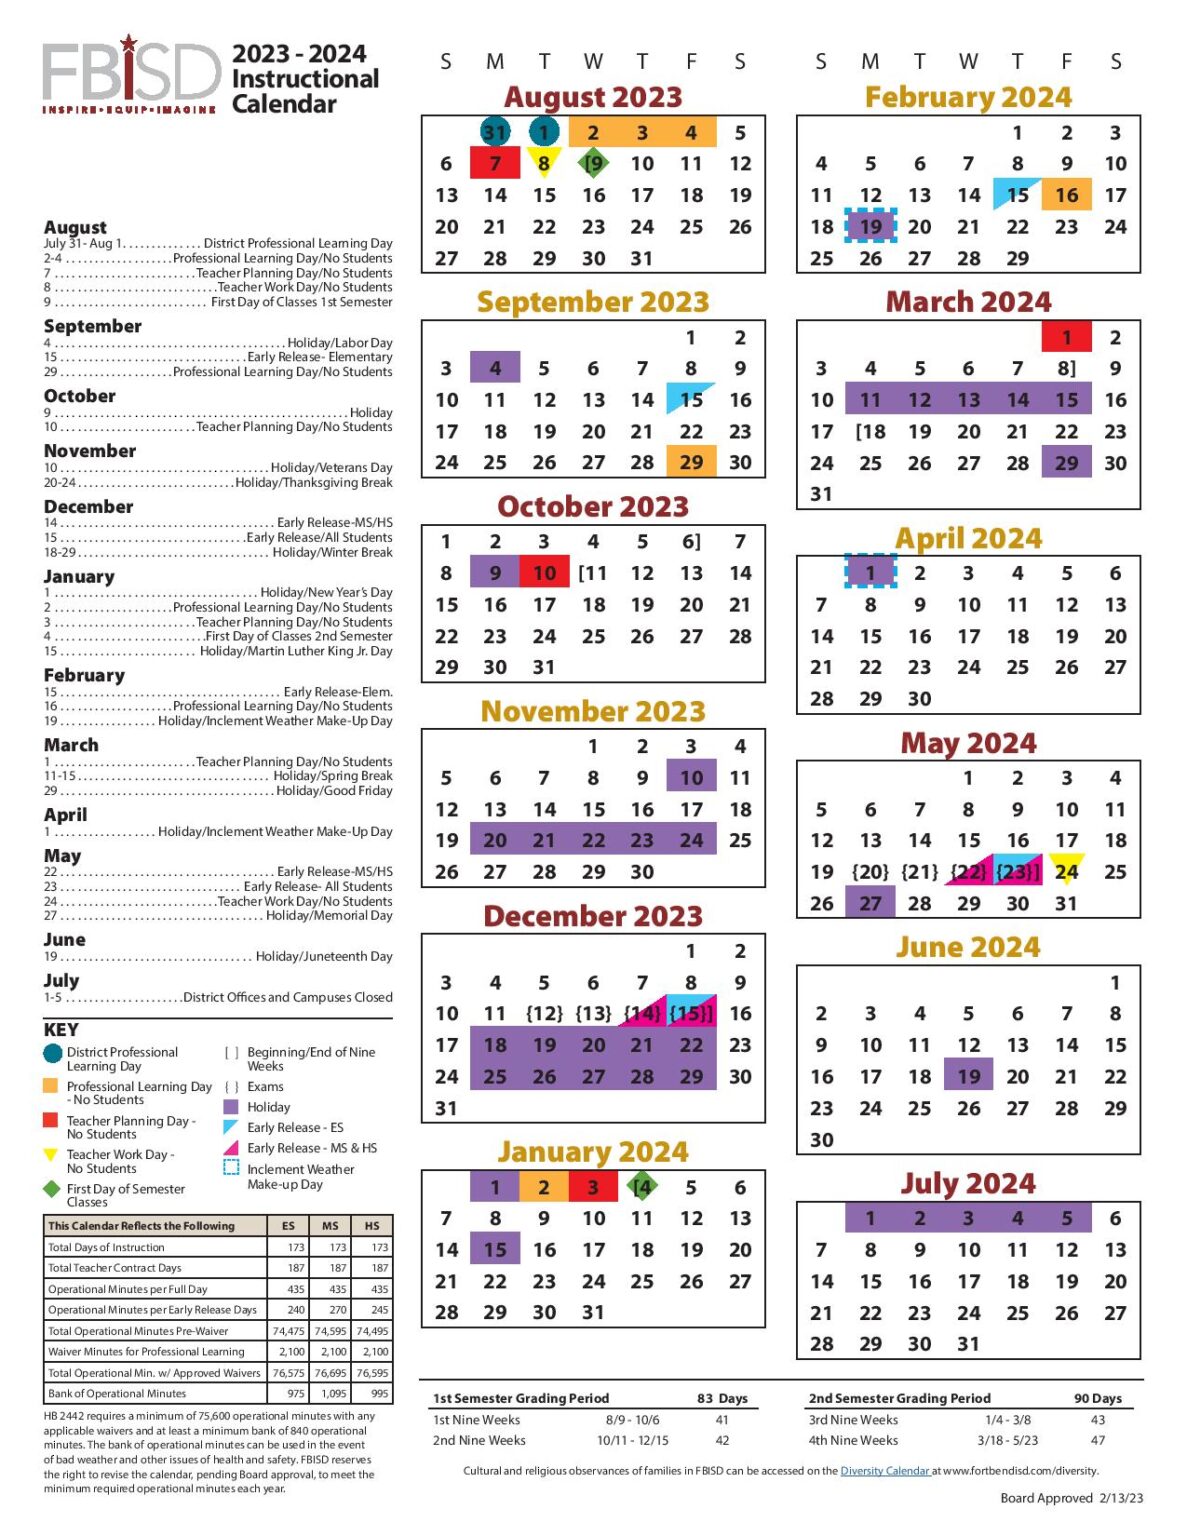 ISD 728 District Calendar: A Comprehensive Guide Calendar January